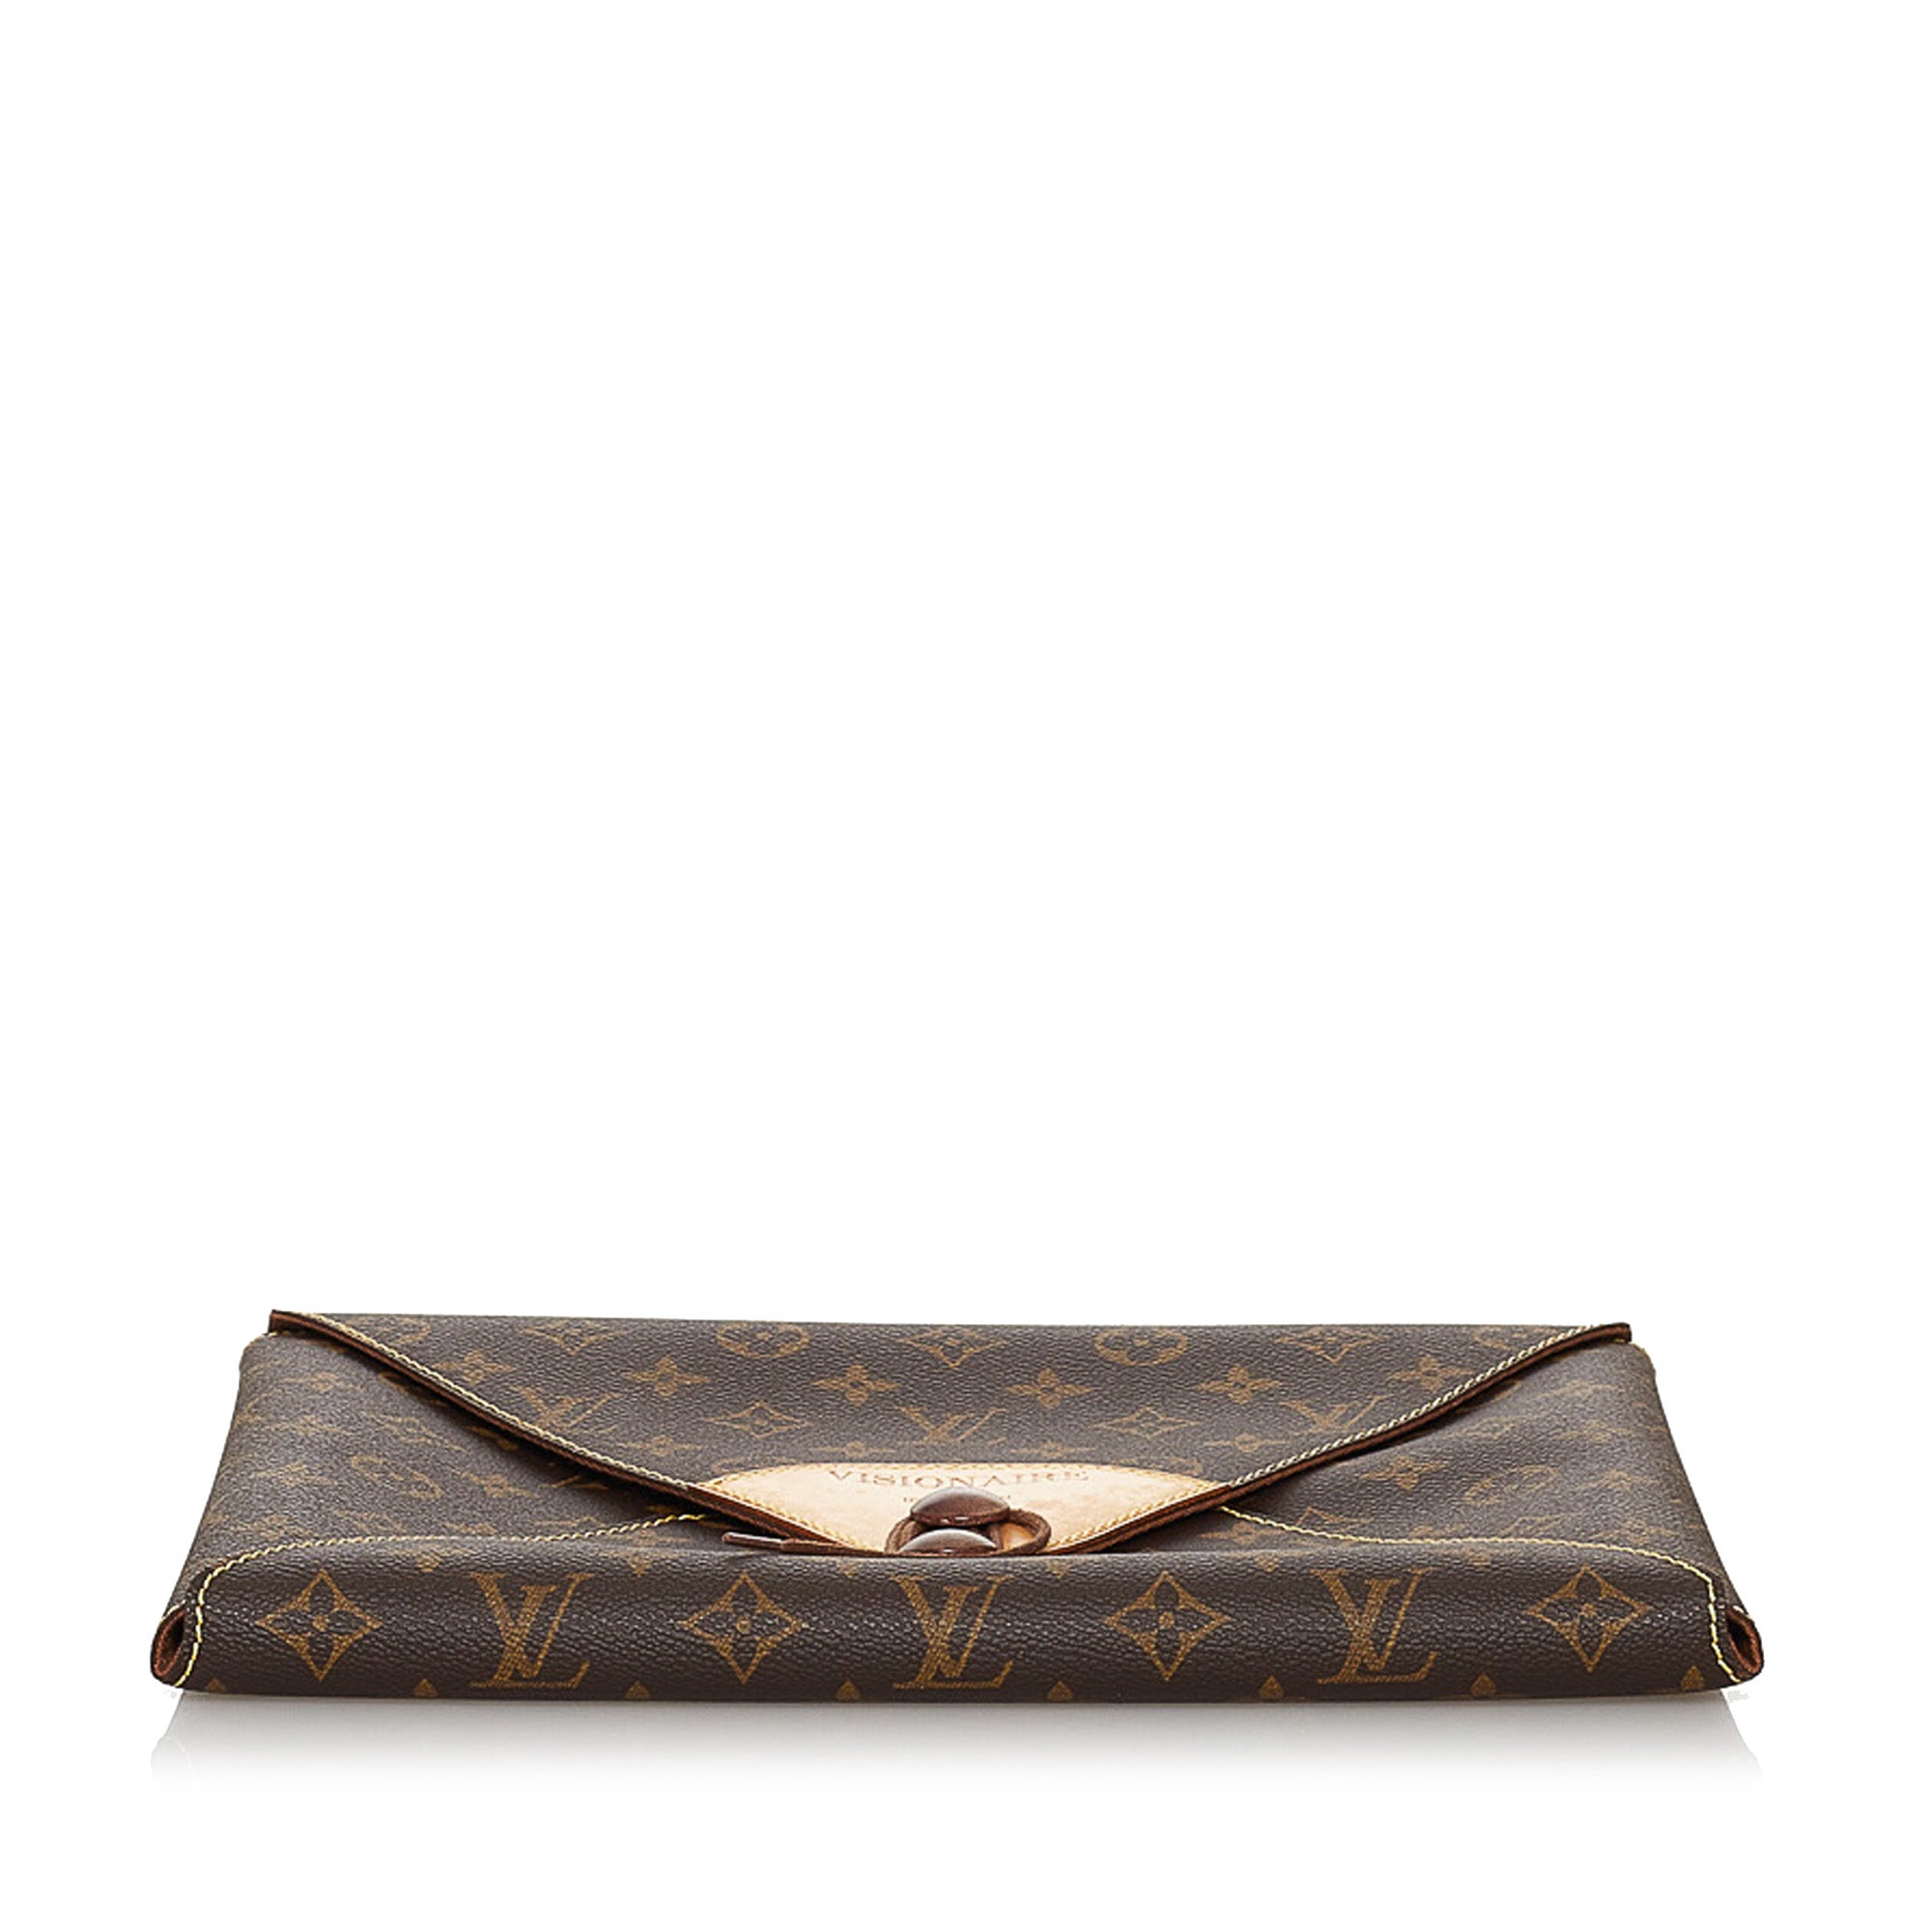 Louis Vuitton Canvas Comparison/Review -Damier Ebene, Azur or Monogram?Which  Canvas with which bag? 